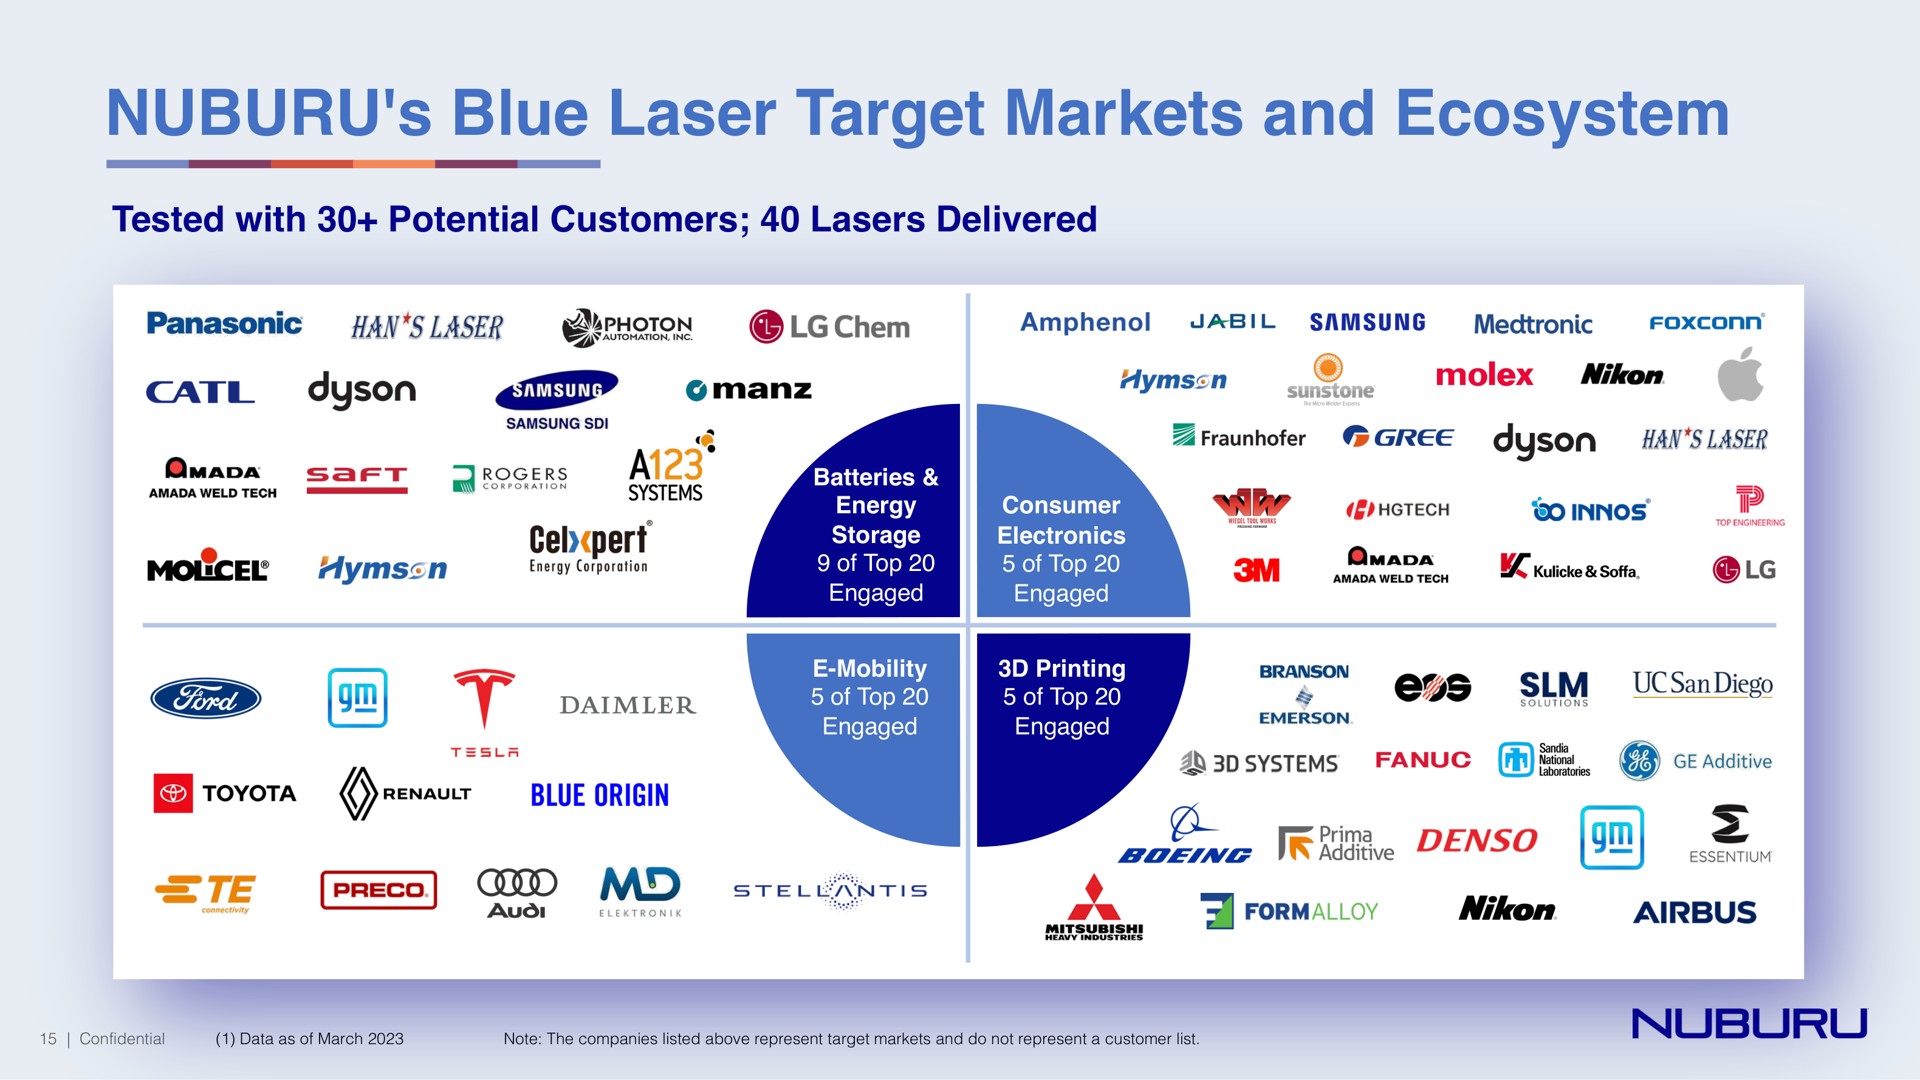 blue laser target markets and ecosystem | NUBURU